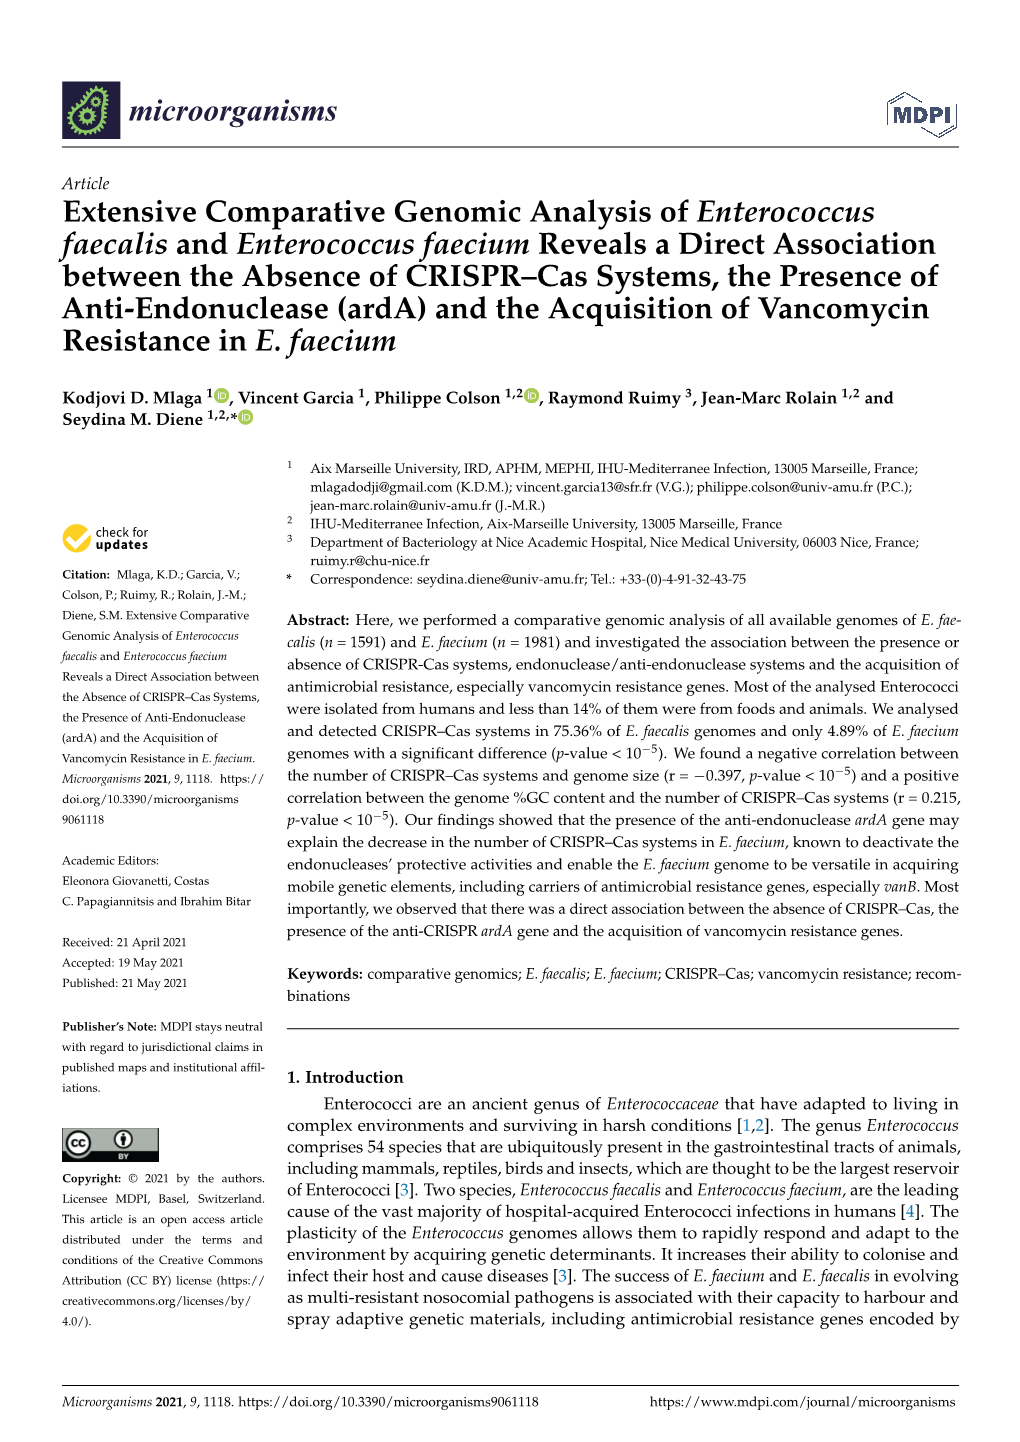 Extensive Comparative Genomic Analysis of Enterococcus Faecalis